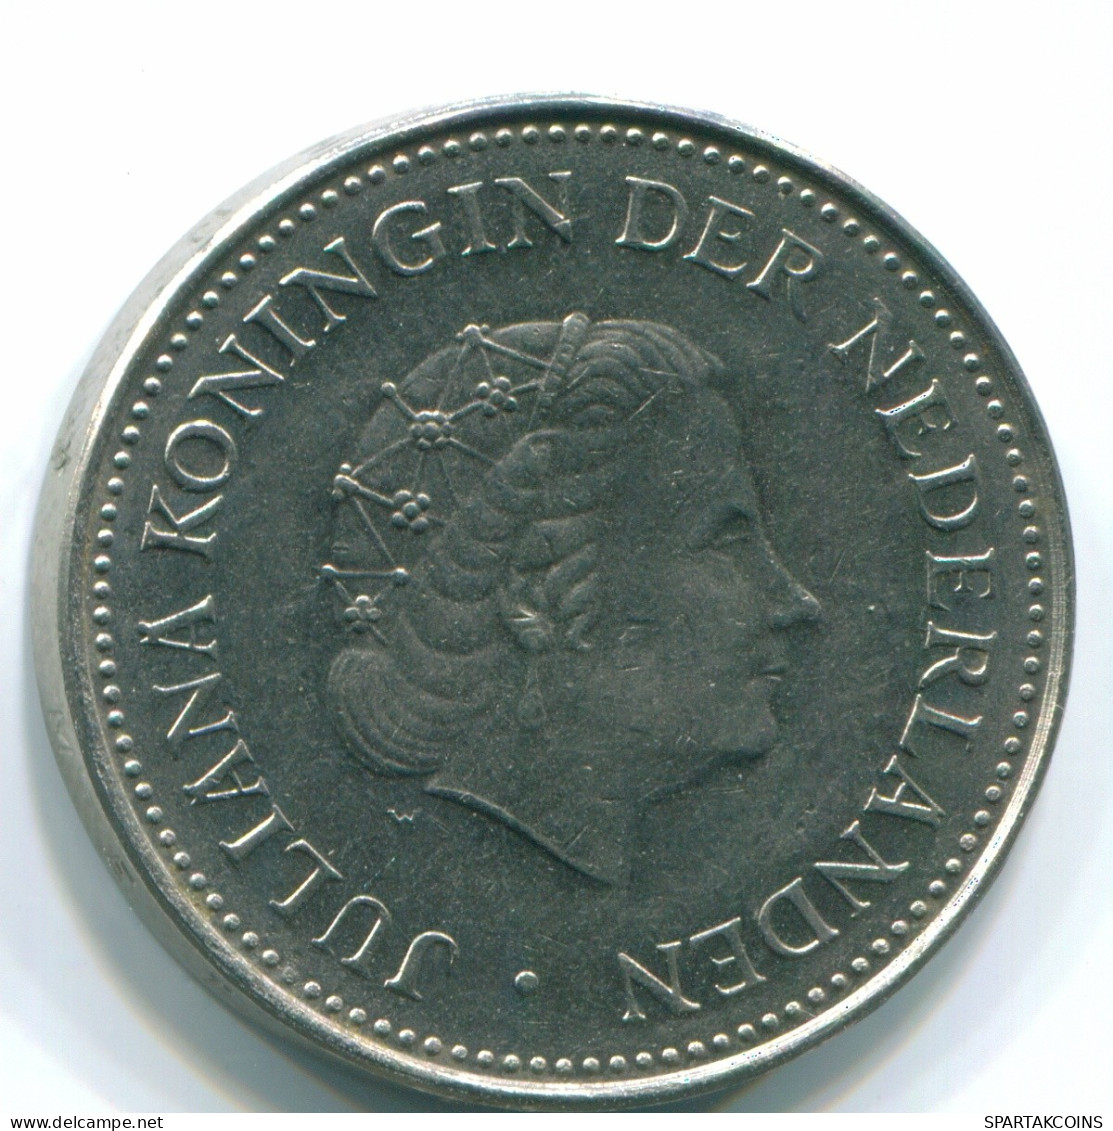 1 GULDEN 1971 NETHERLANDS ANTILLES Nickel Colonial Coin #S11968.U.A - Antilles Néerlandaises